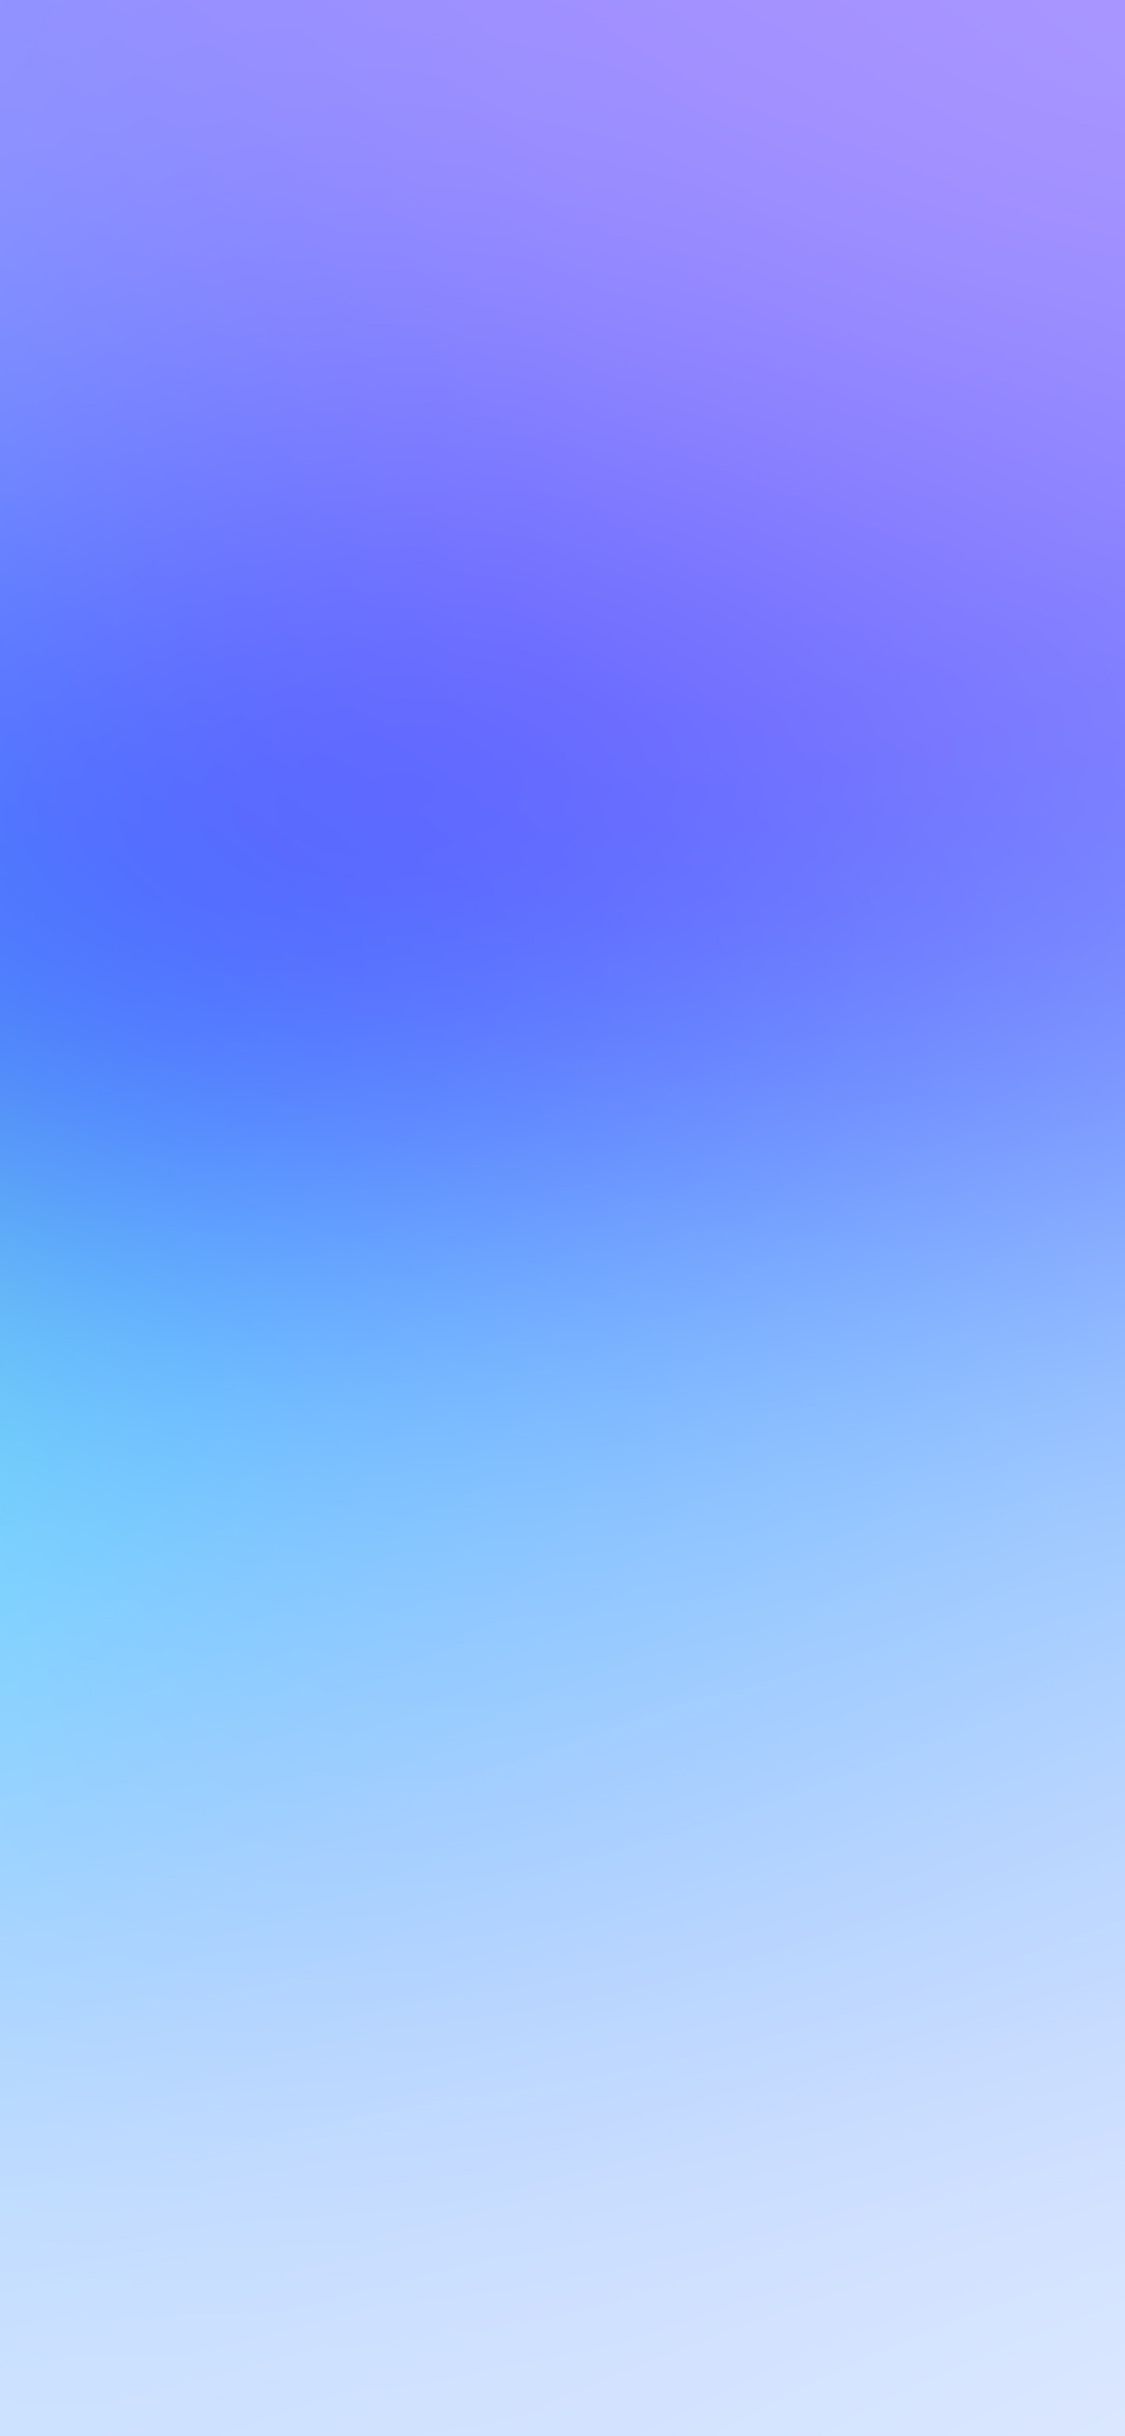 Pastel Blue iPhone X